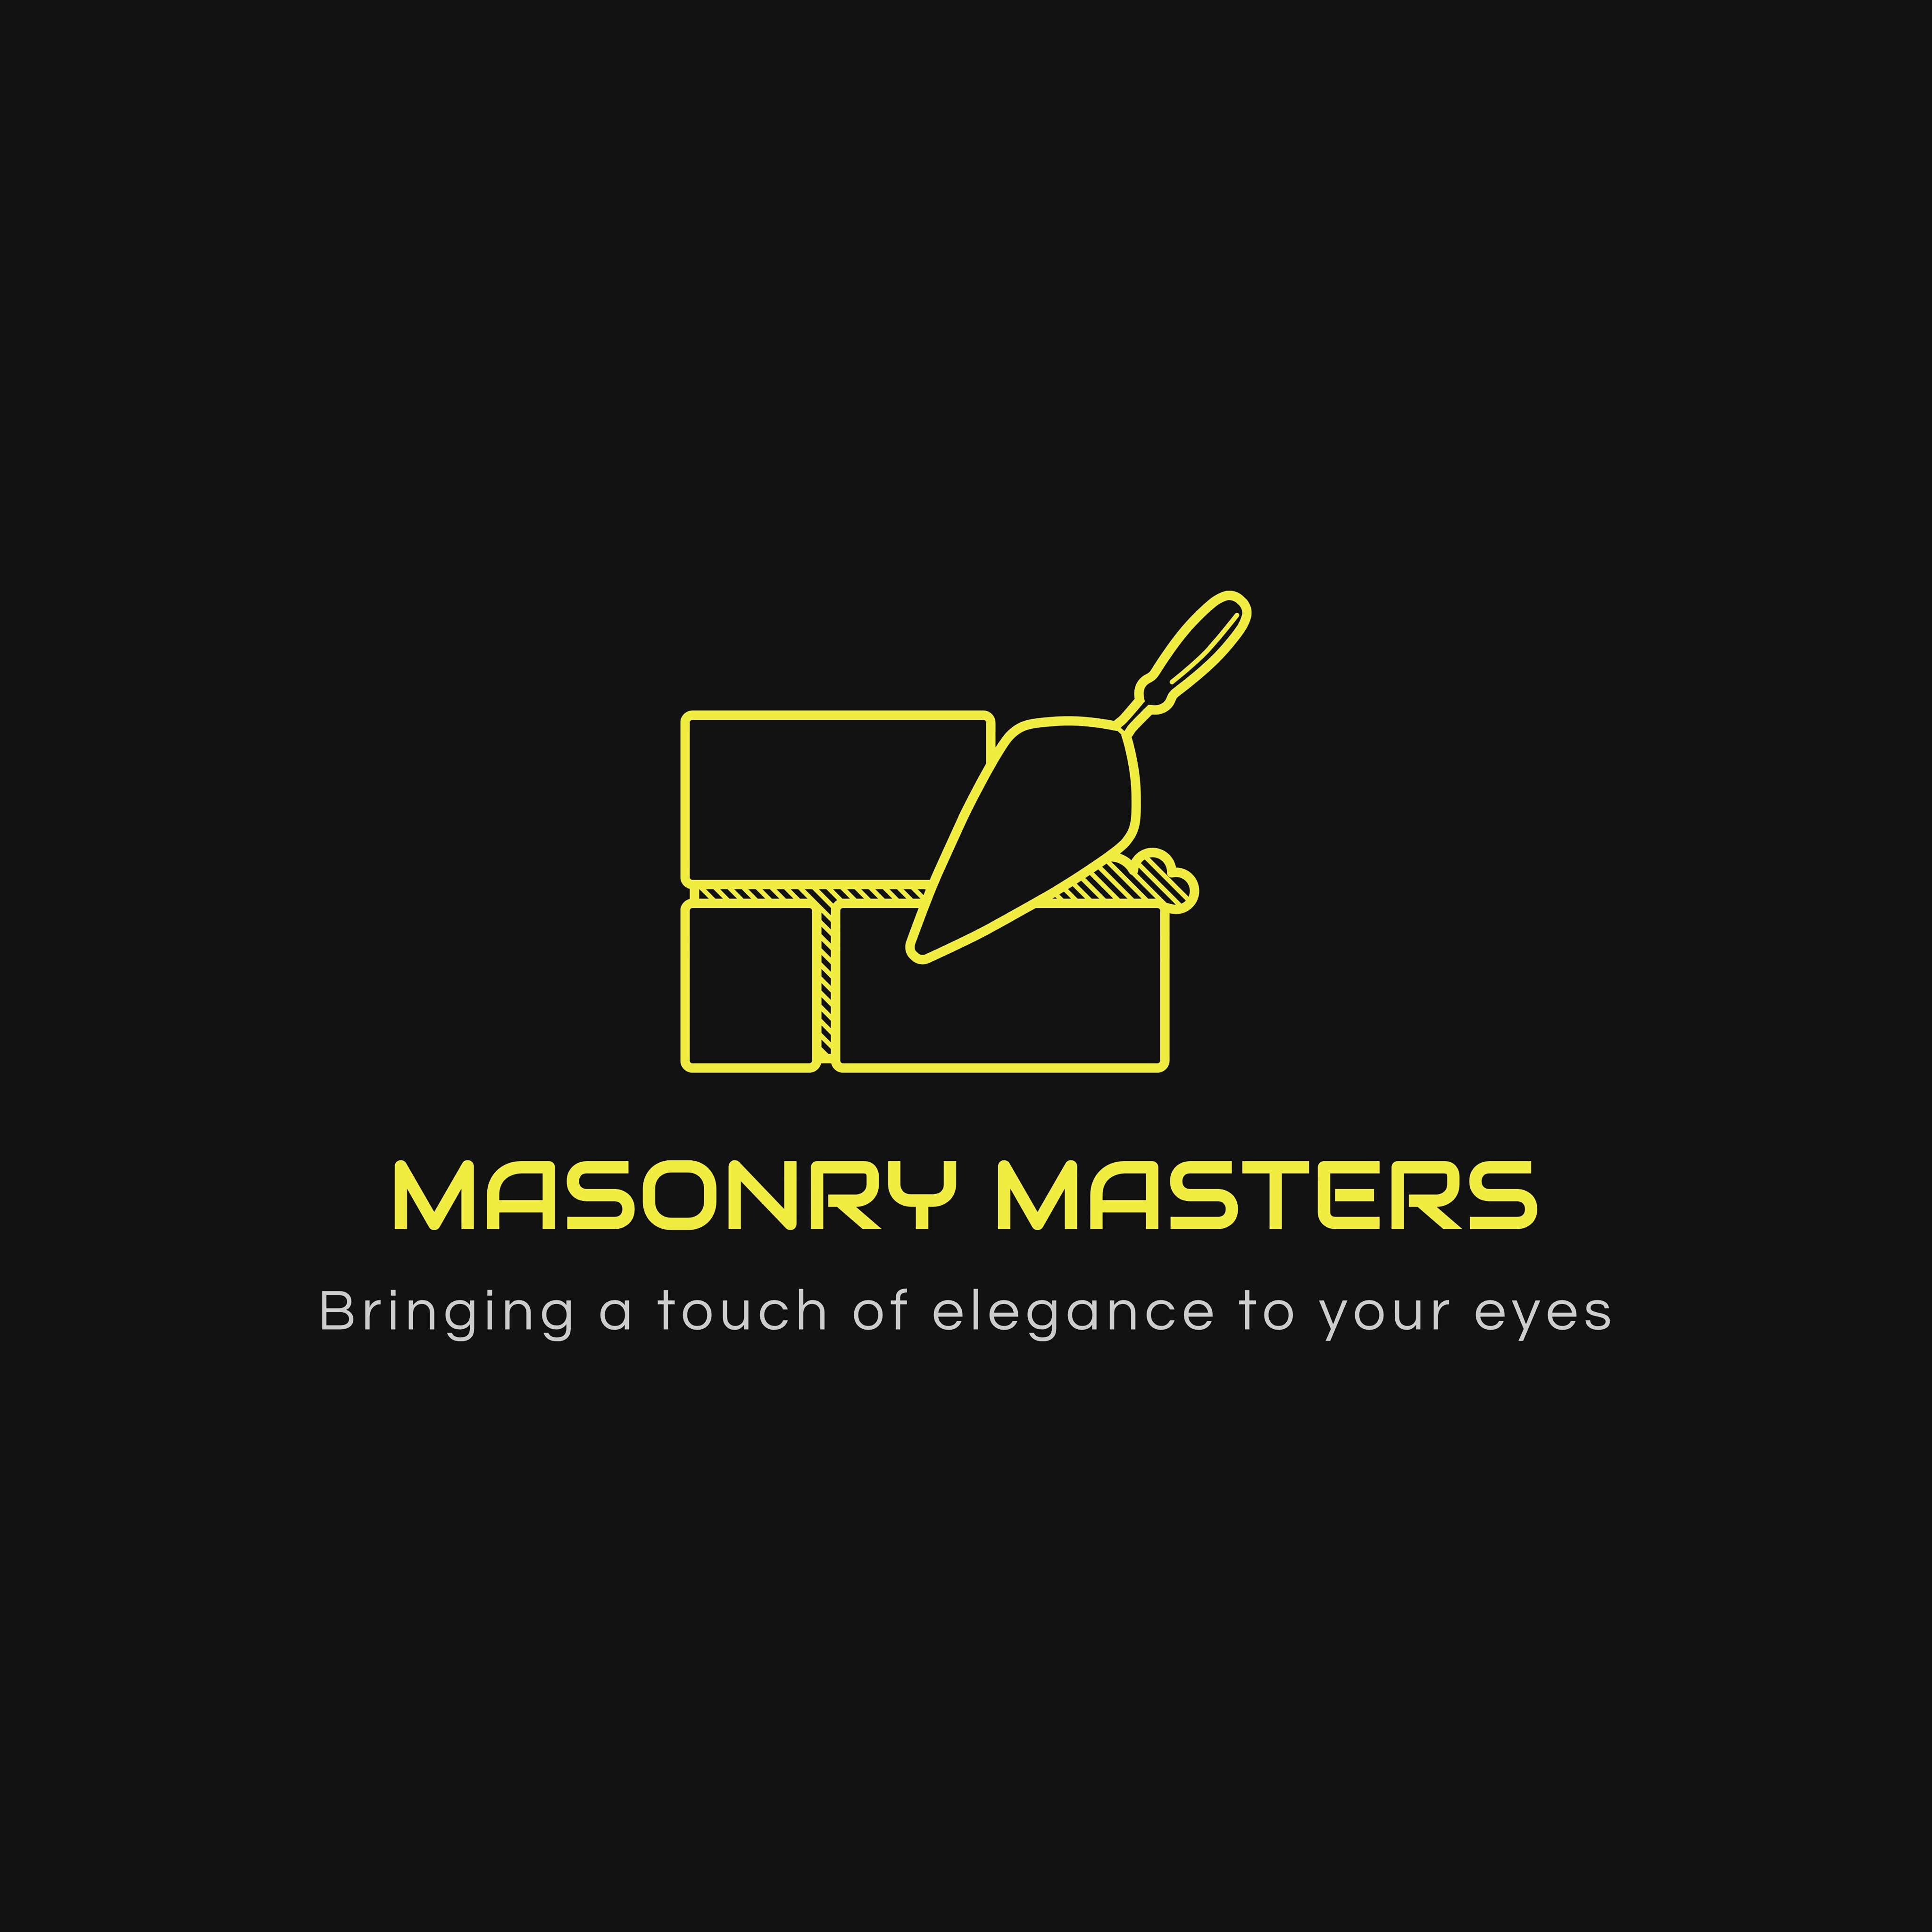 Masonry Masters